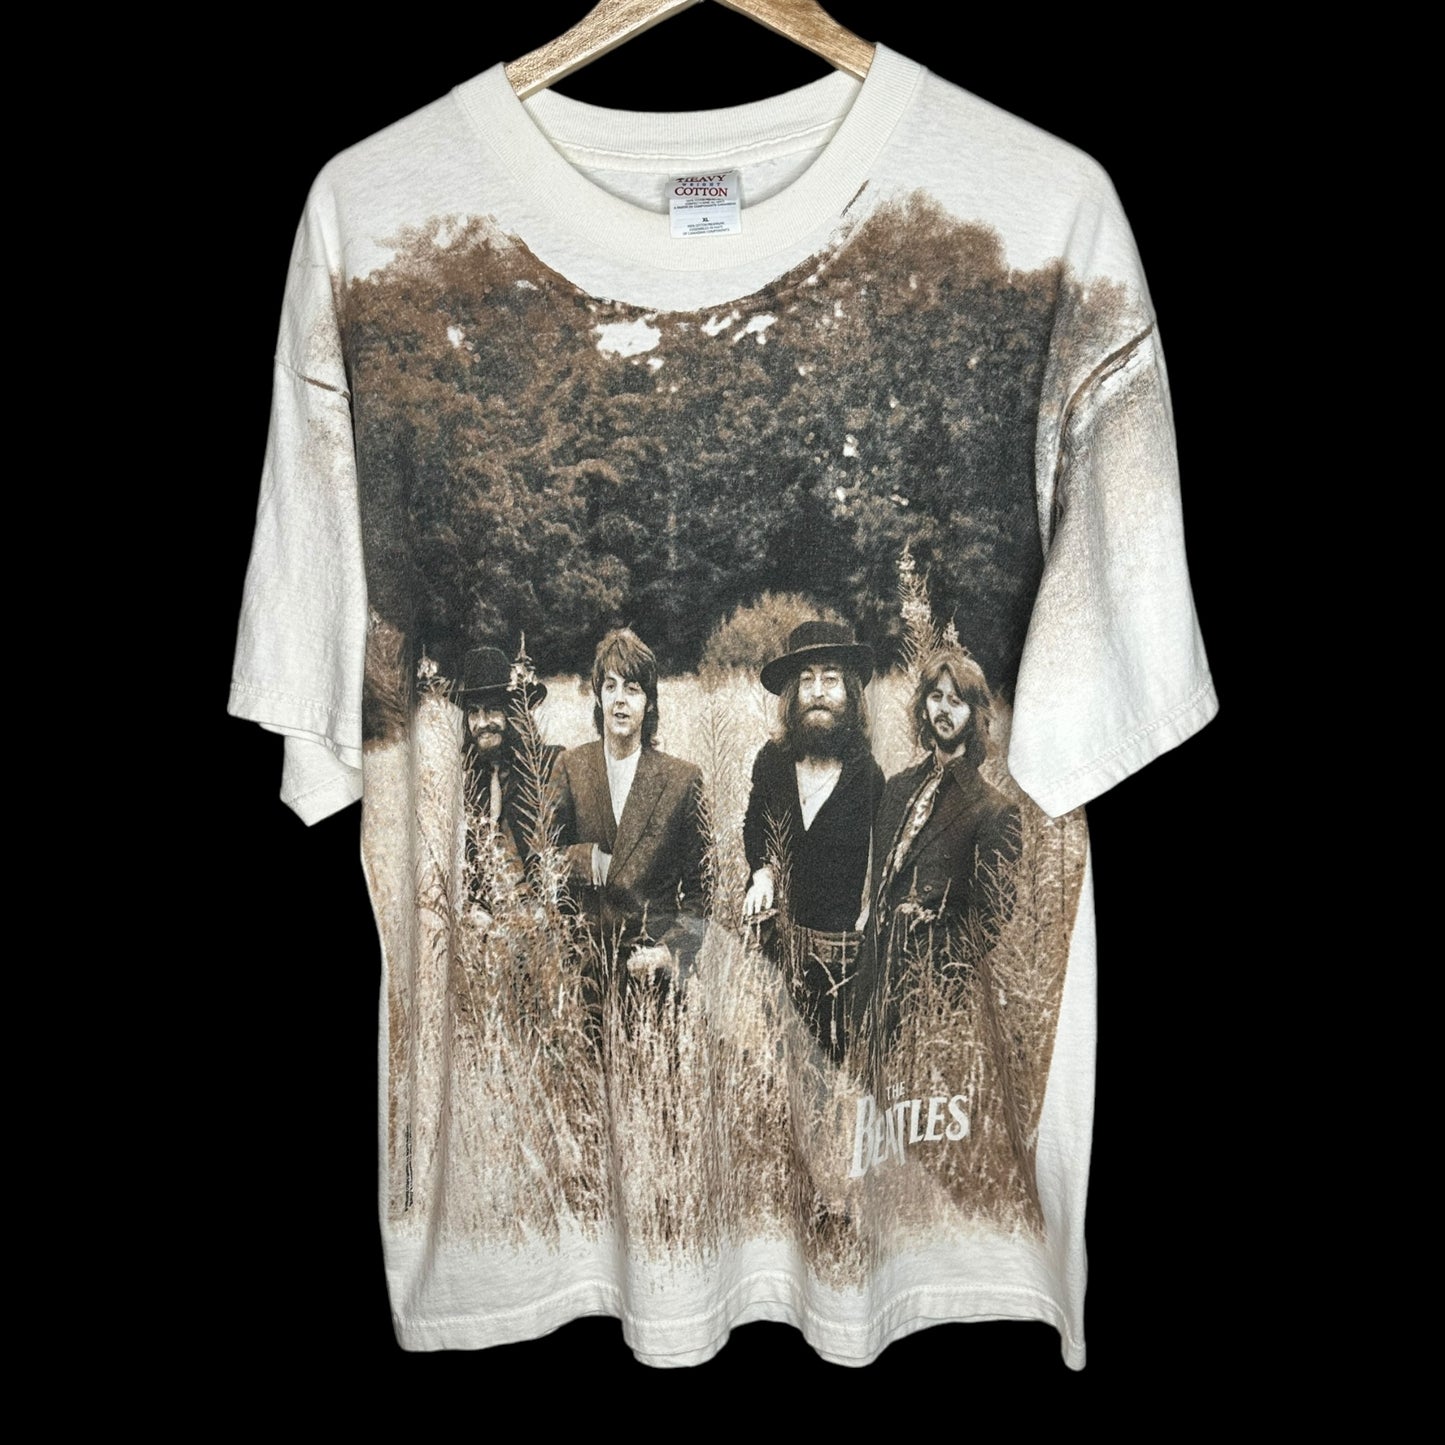 Vintage 1998 The Beatles T-Shirt XL